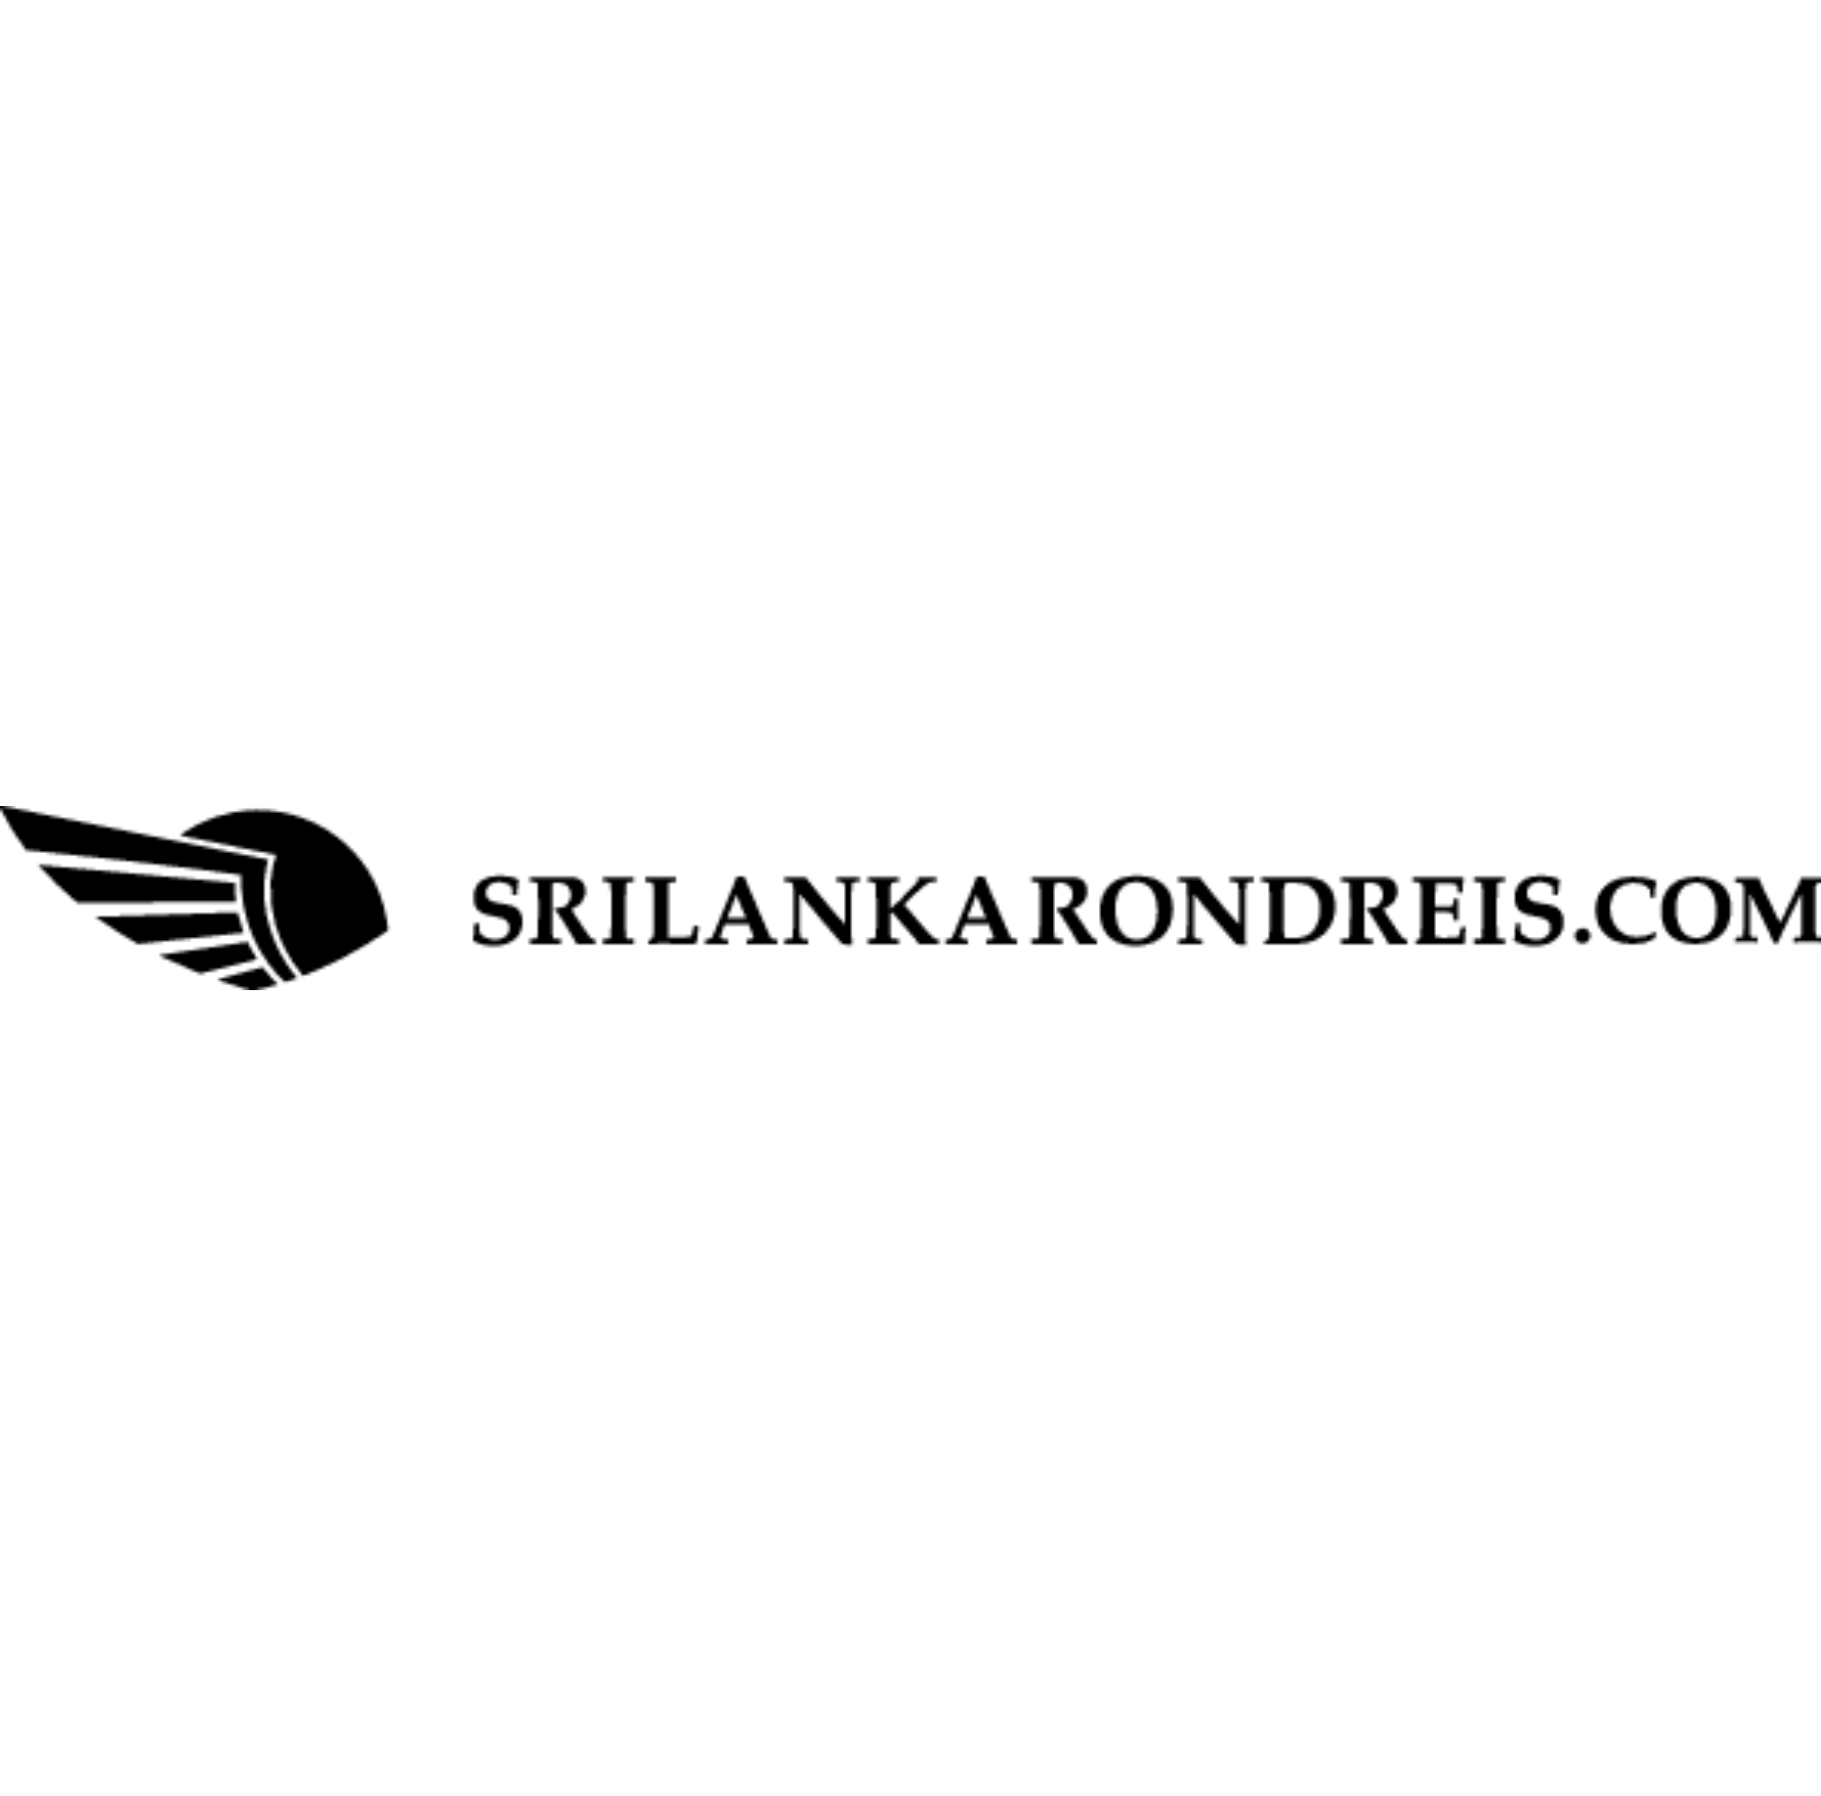 Srilankarondreis.com